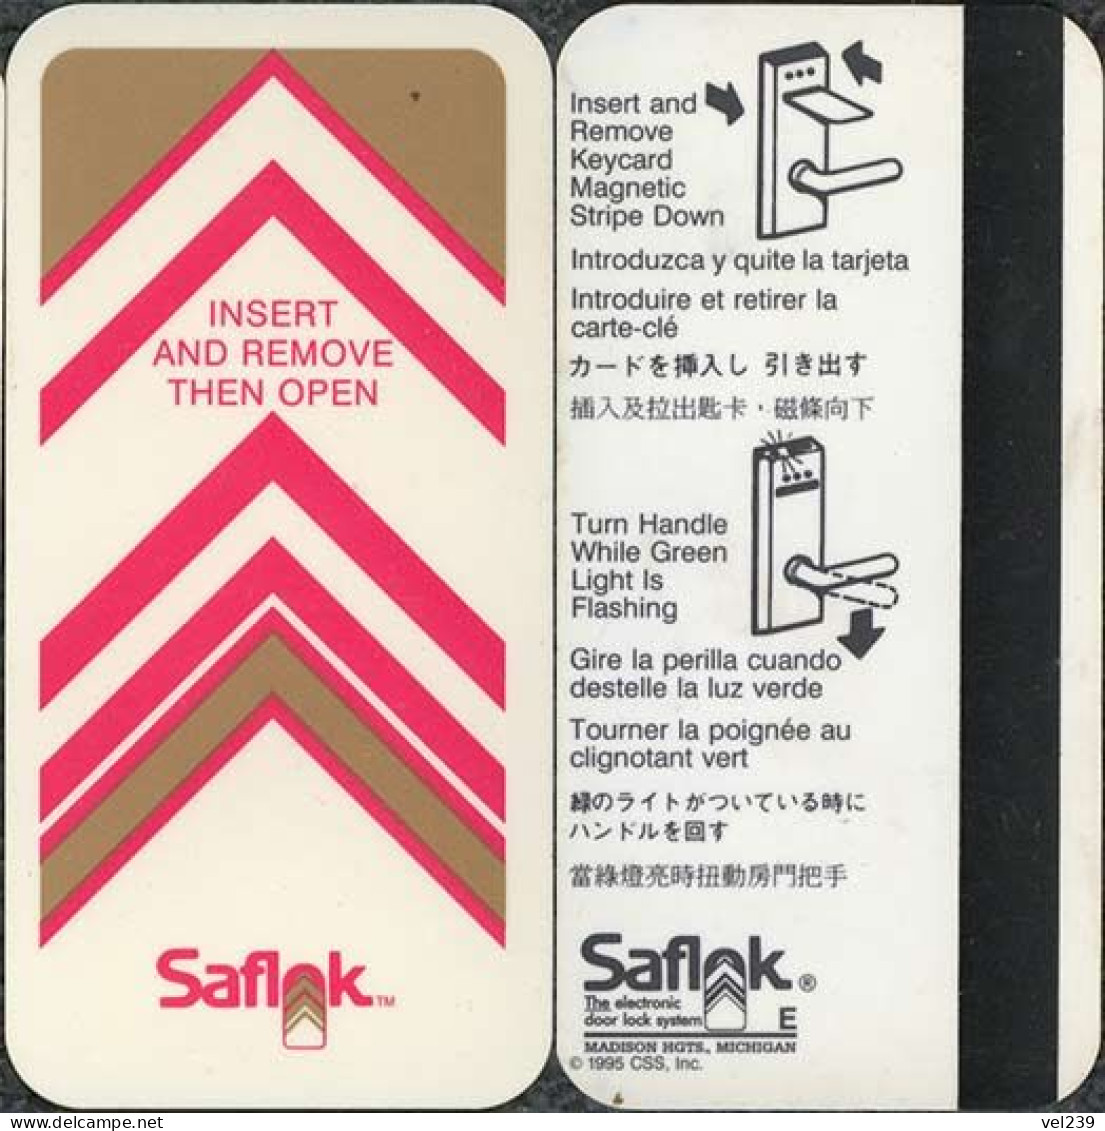 Saflock - Hotel Keycards